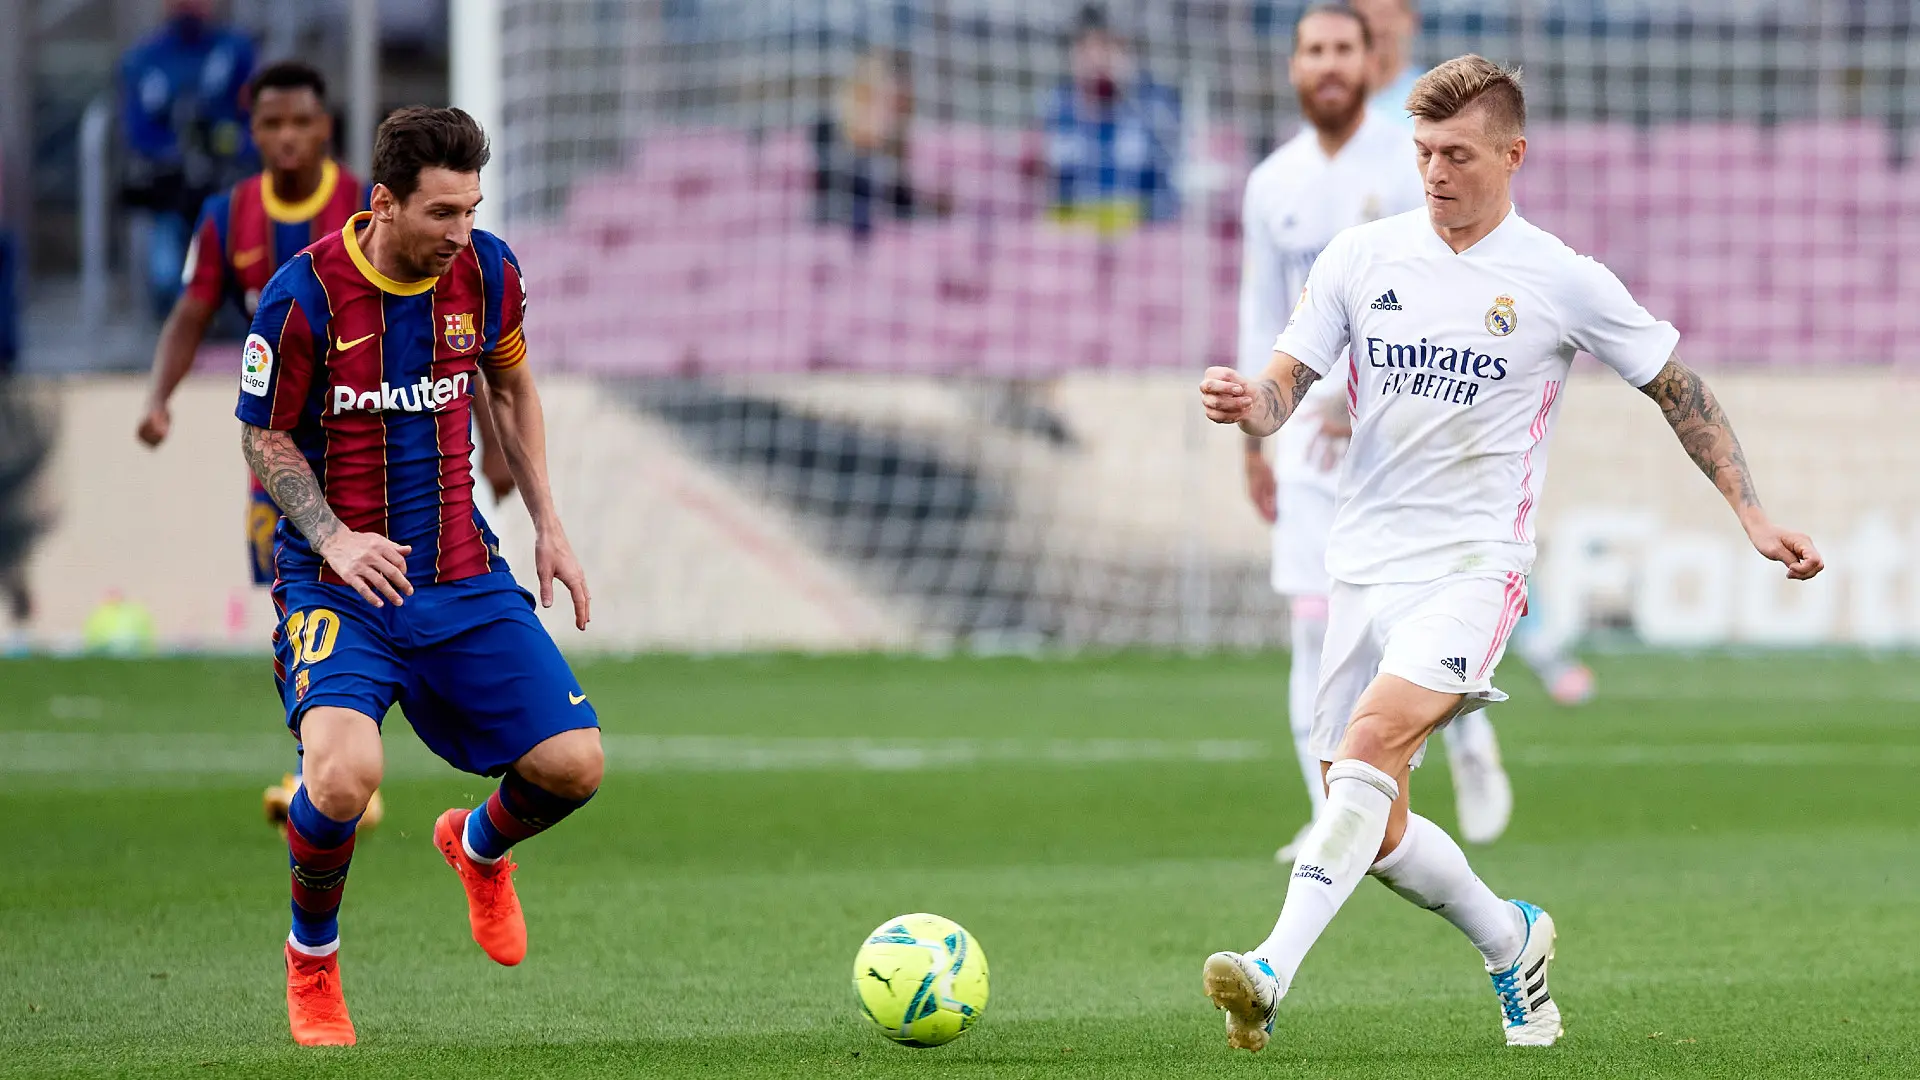 messi juega en el real madrid - Cuál es el equipo de Messi Real Madrid o Barcelona